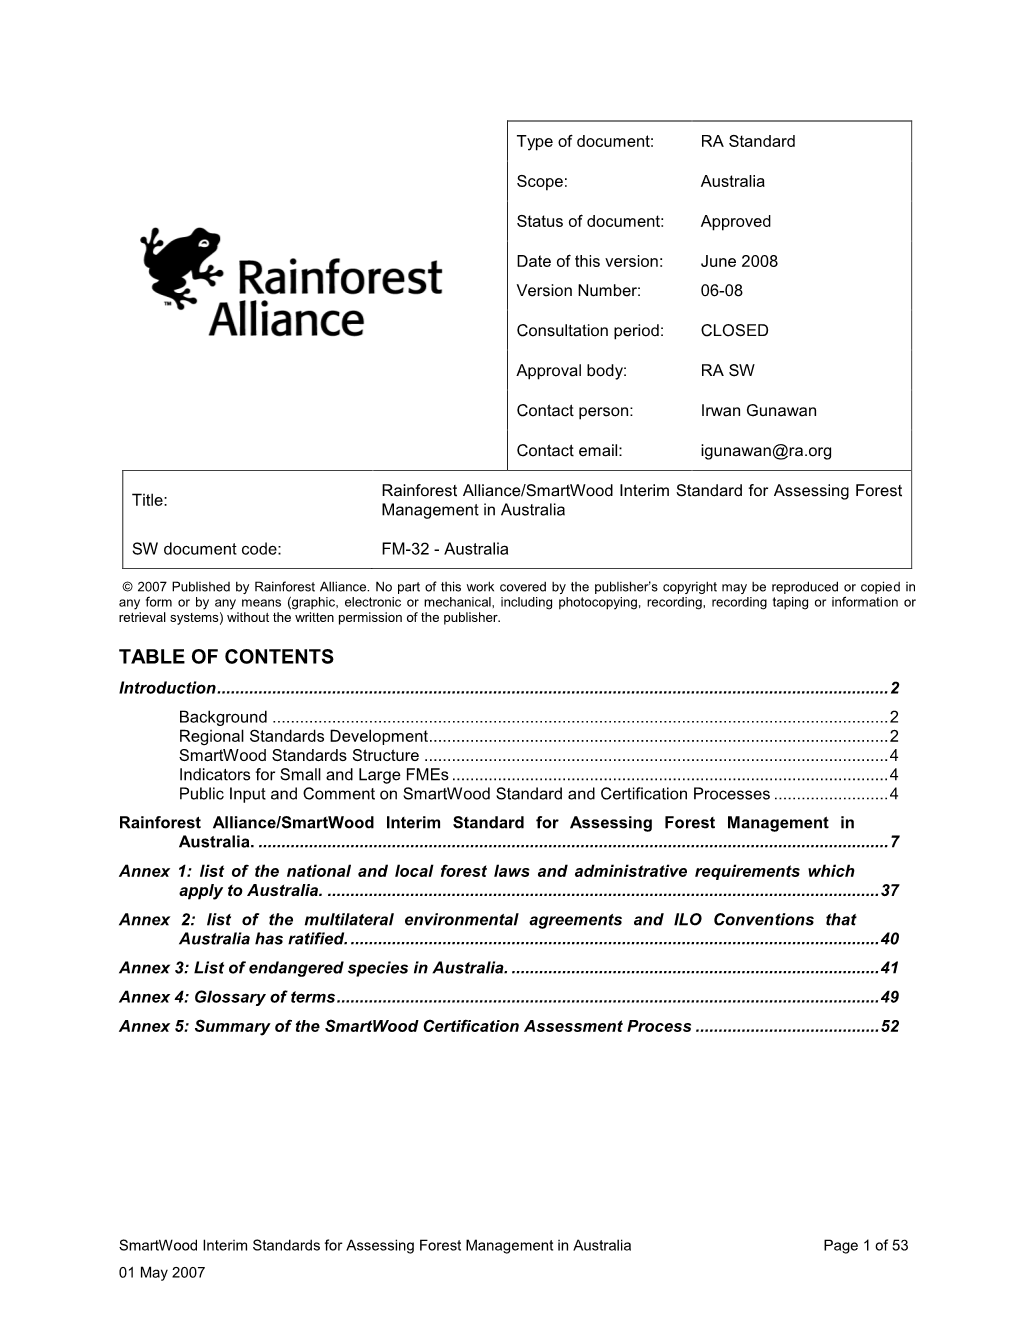 Rainforest Alliance/Smartwood Interim Standards for Assessing